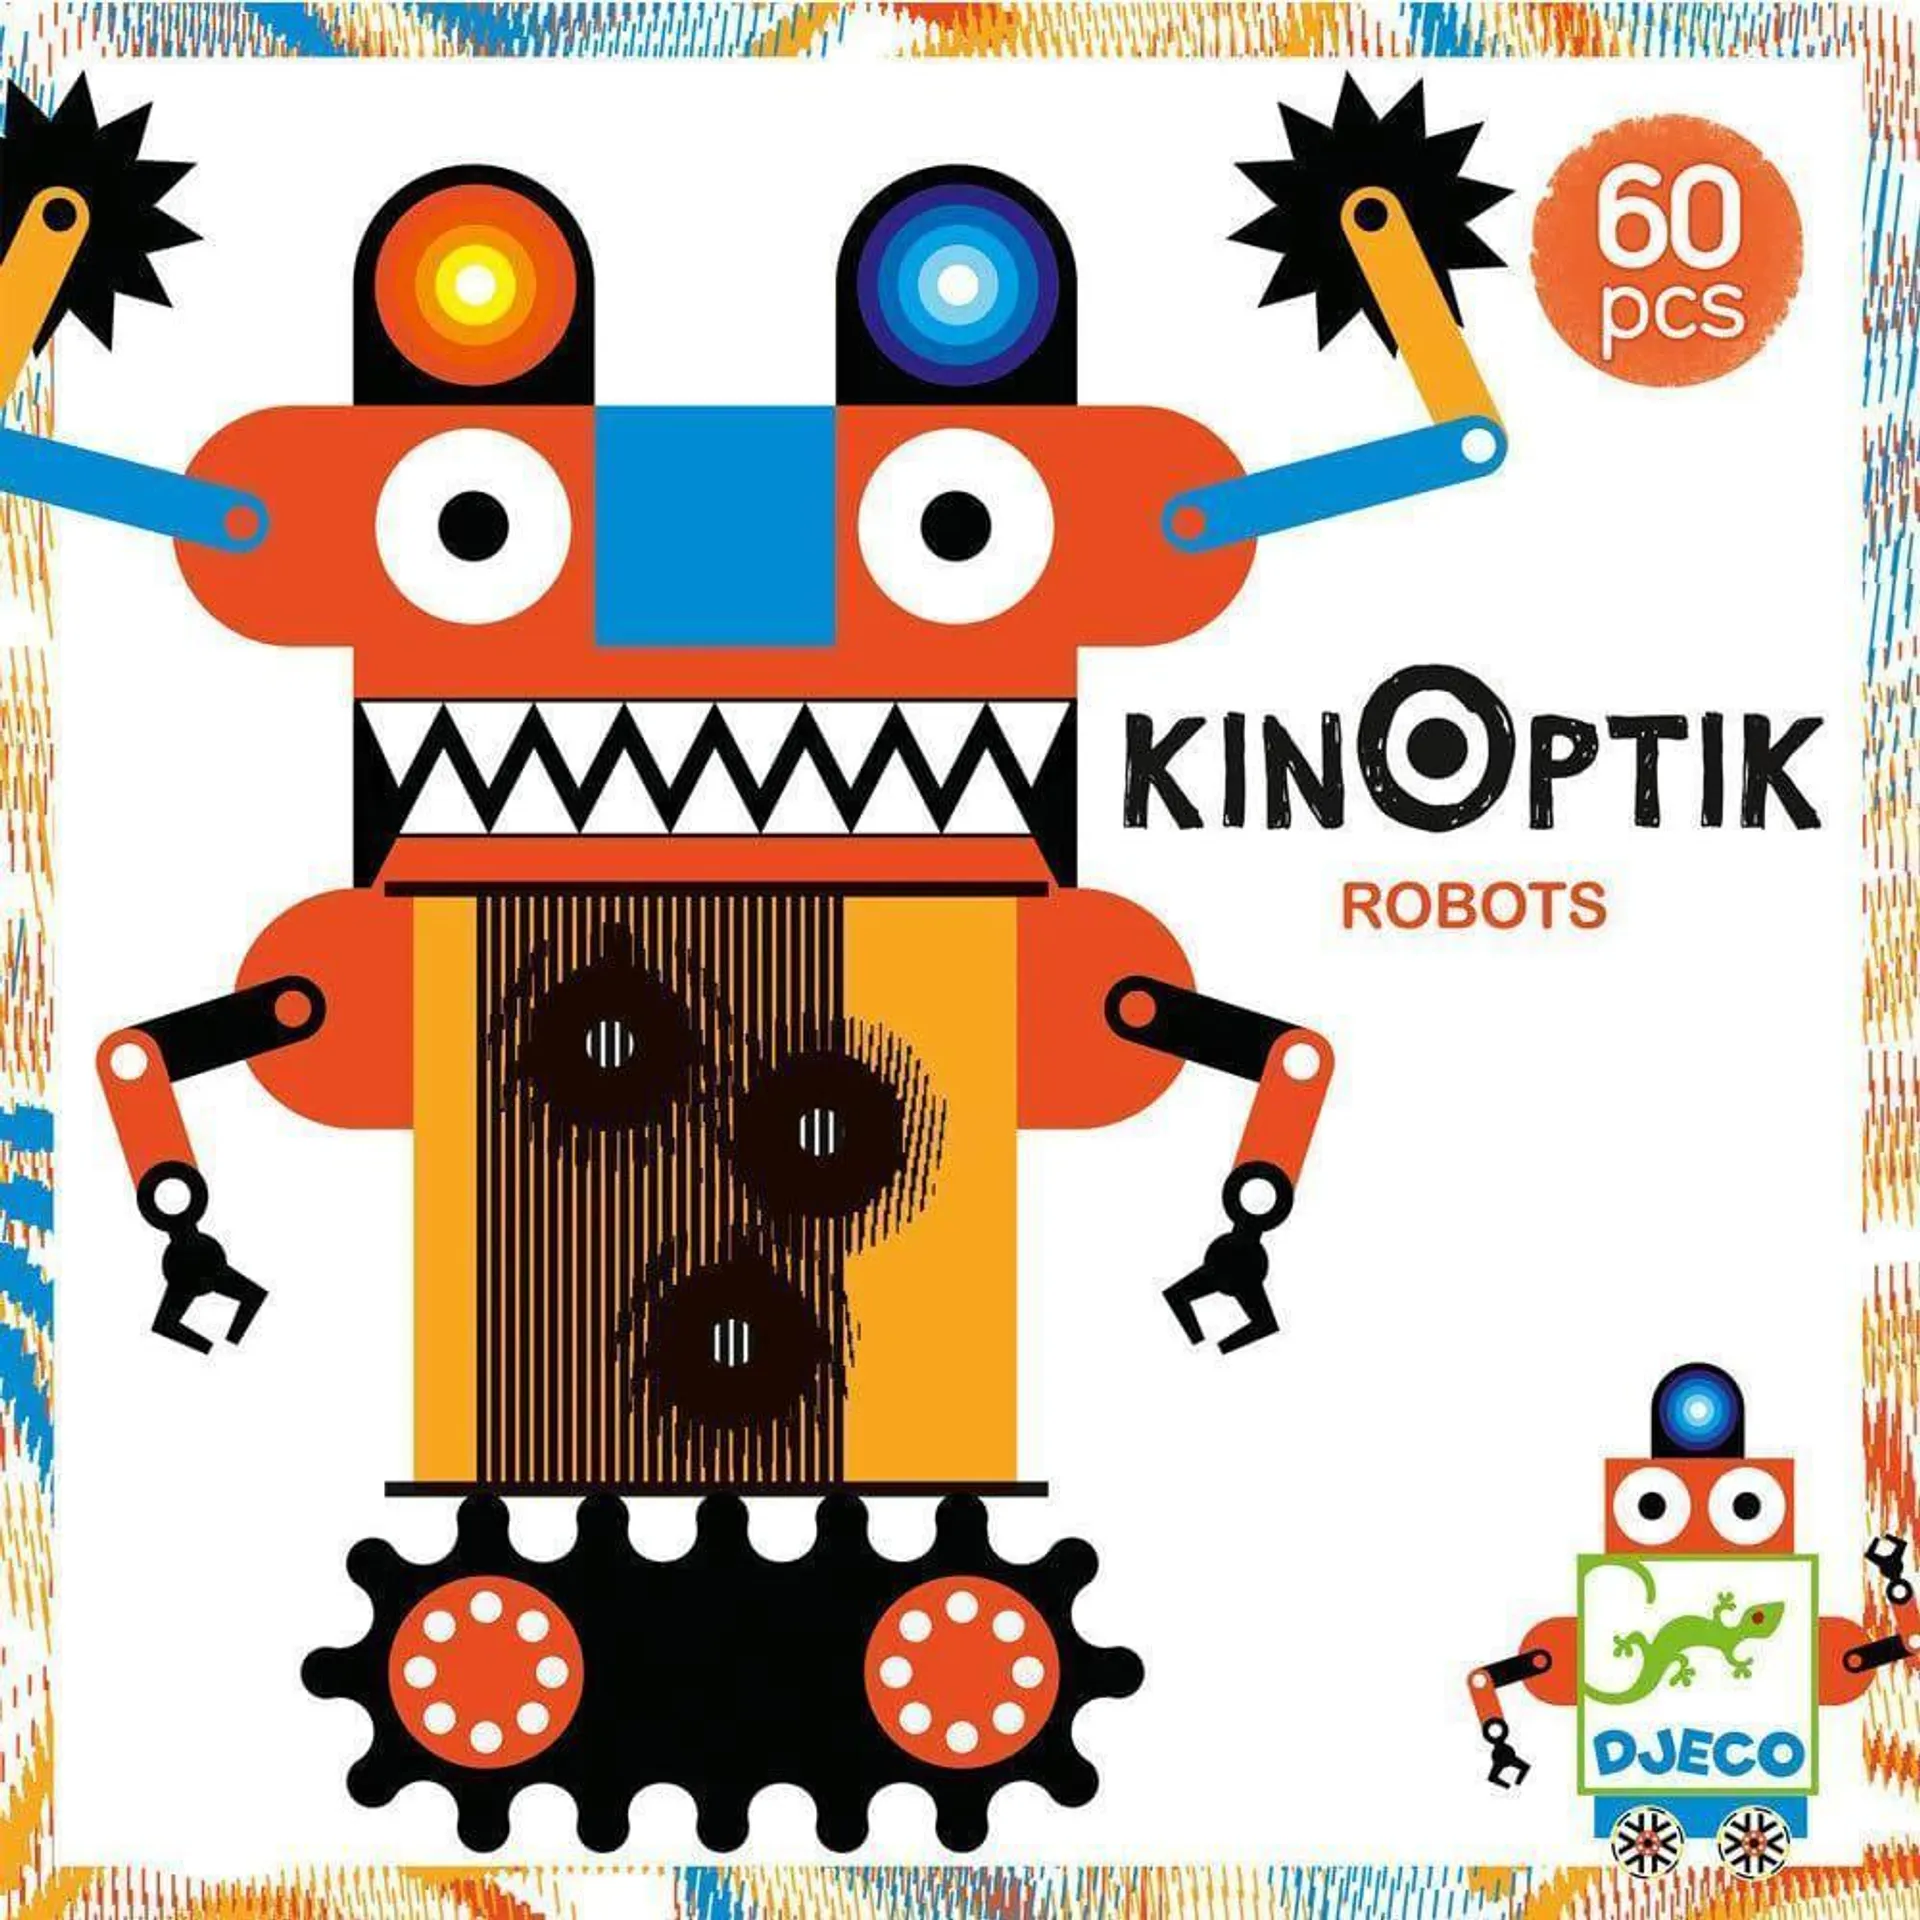 Djeco Kinoptic Moving Art Robots